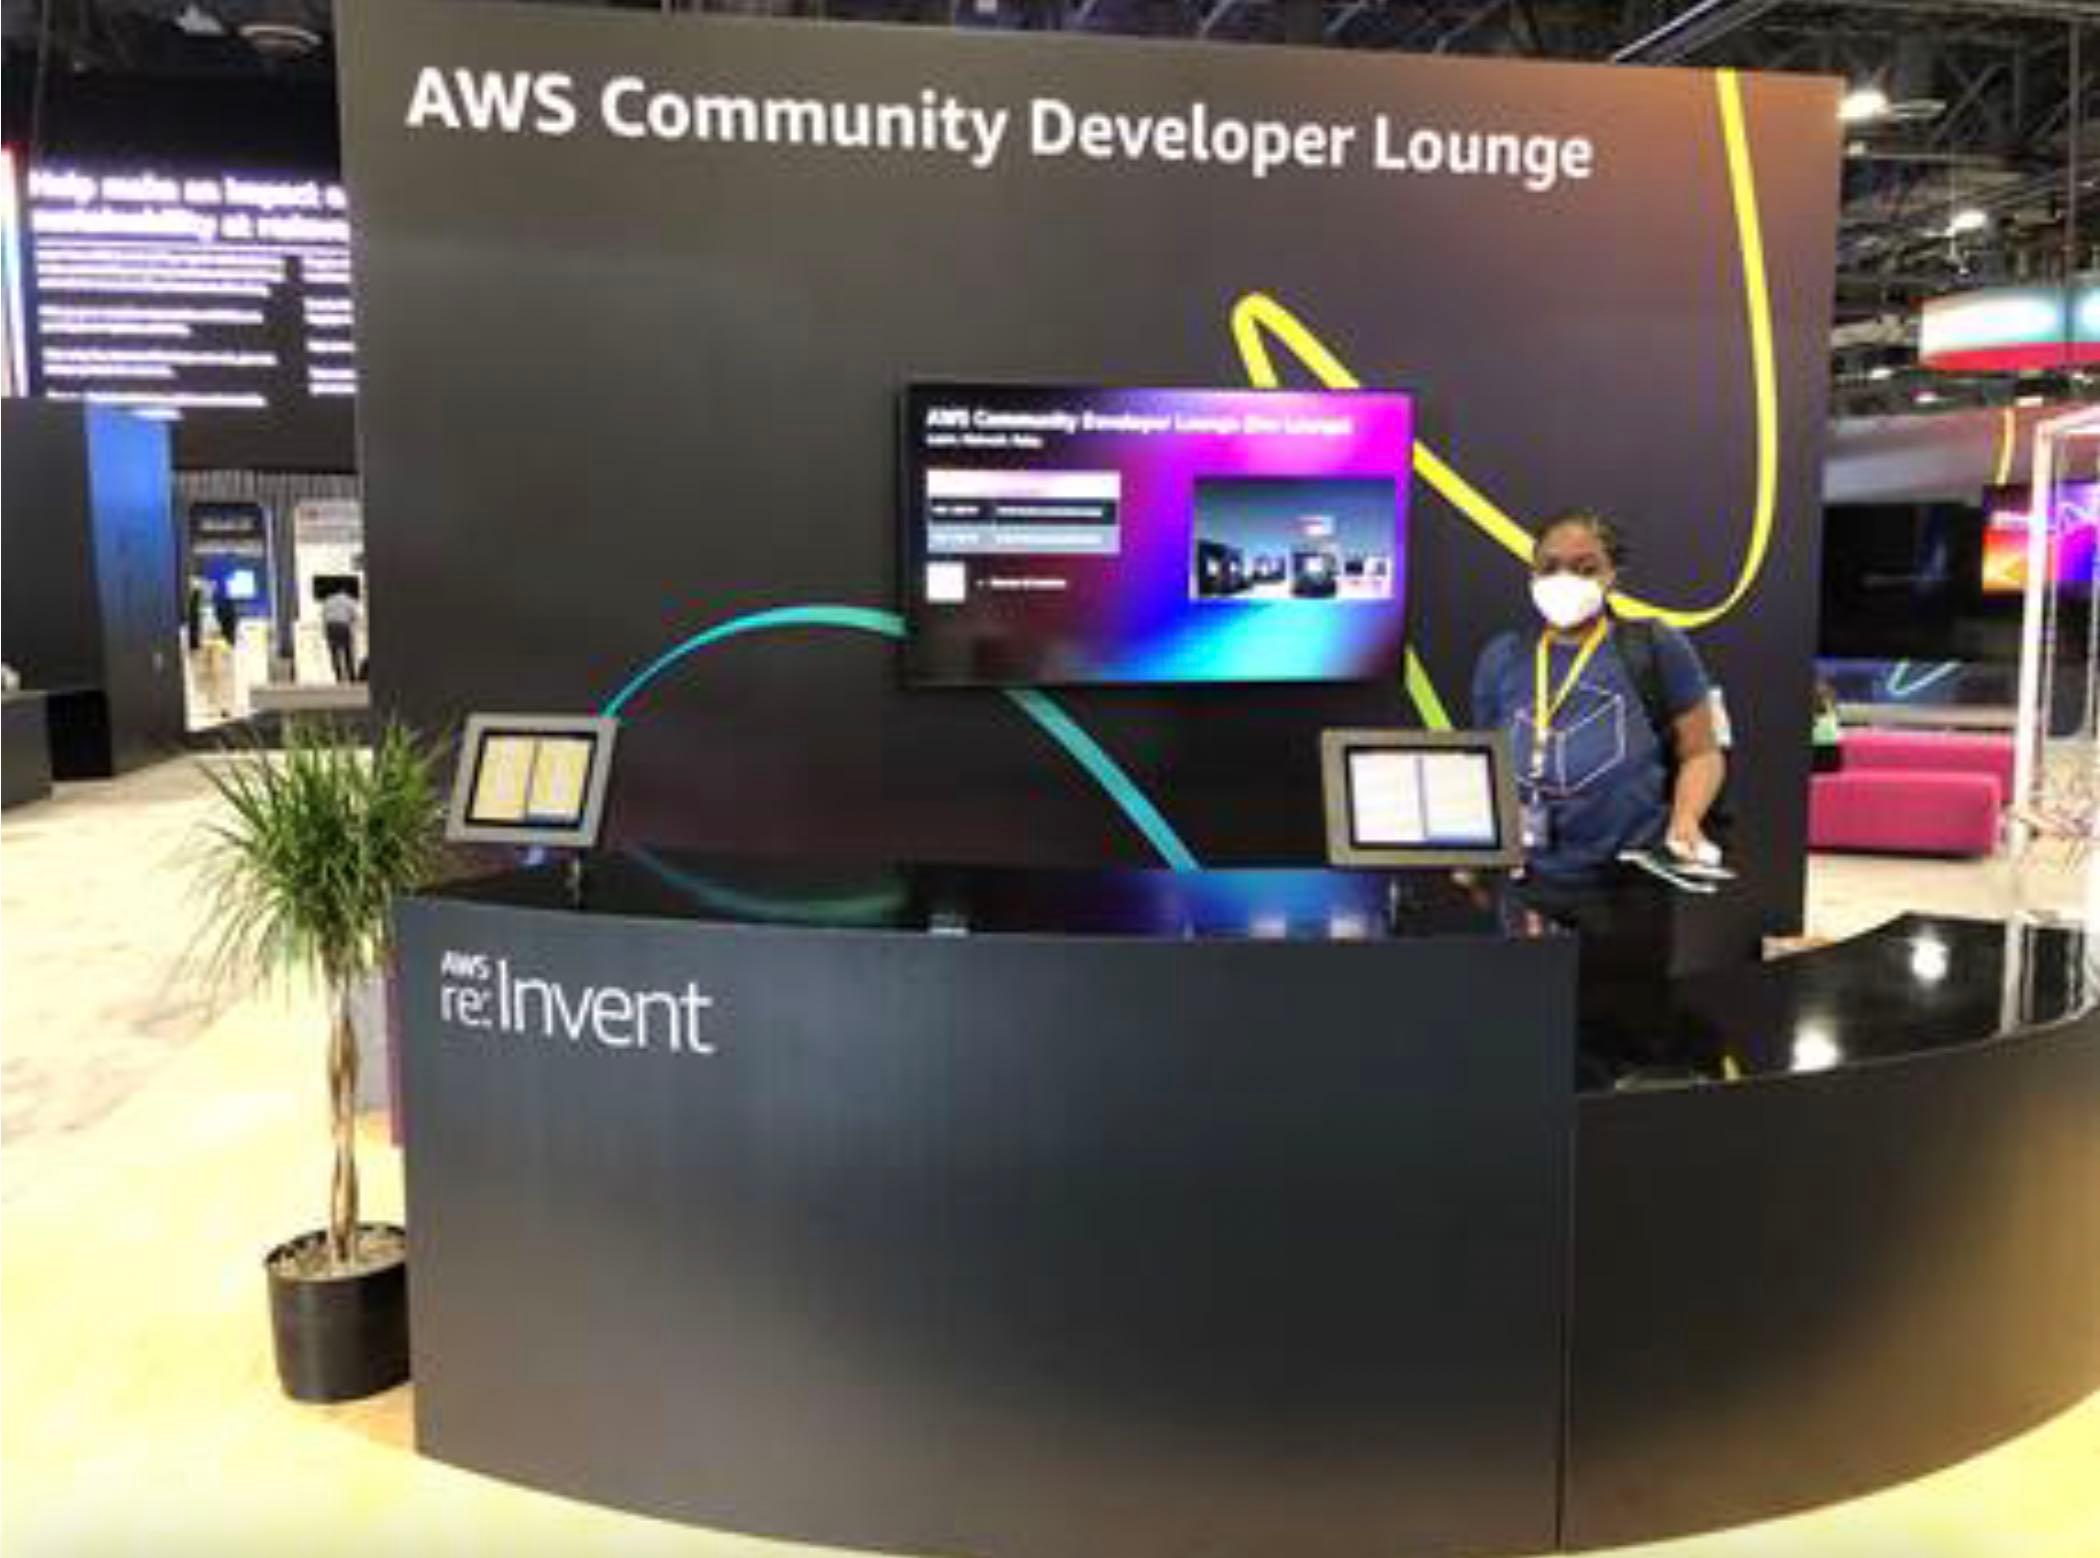 AWS Community Developer Lounge